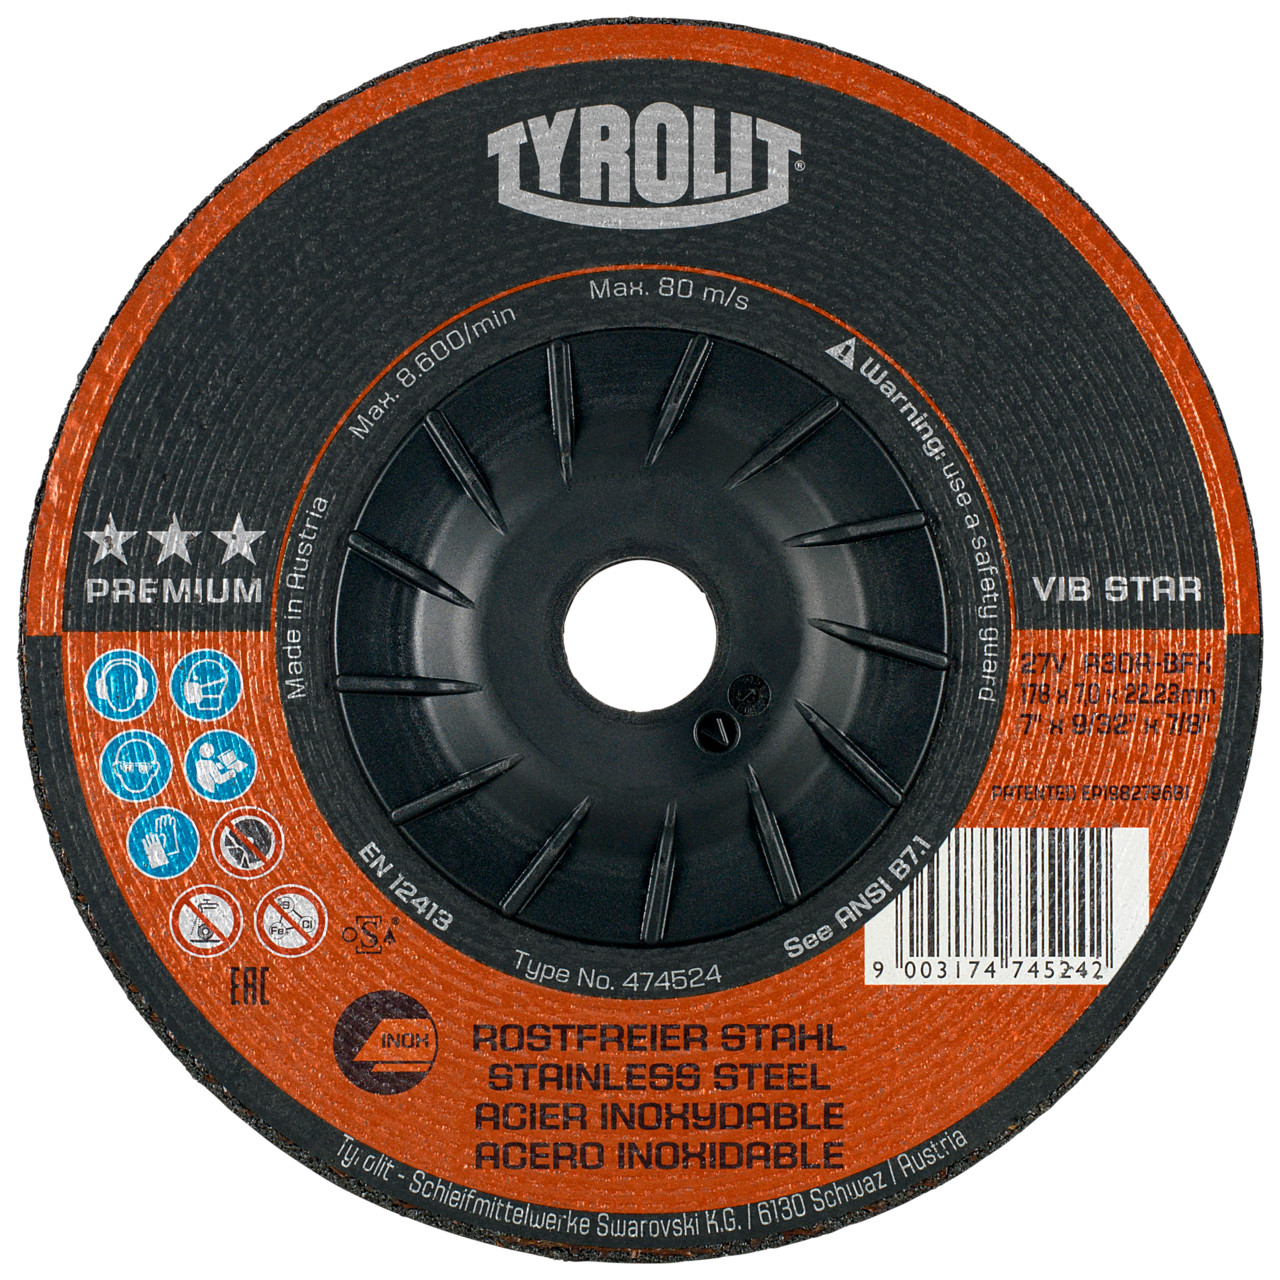 TYROLIT grinding wheel DxUxH 178x7x22.23 VIBSTAR for stainless steel, shape: 27 - offset version, Art. 474524